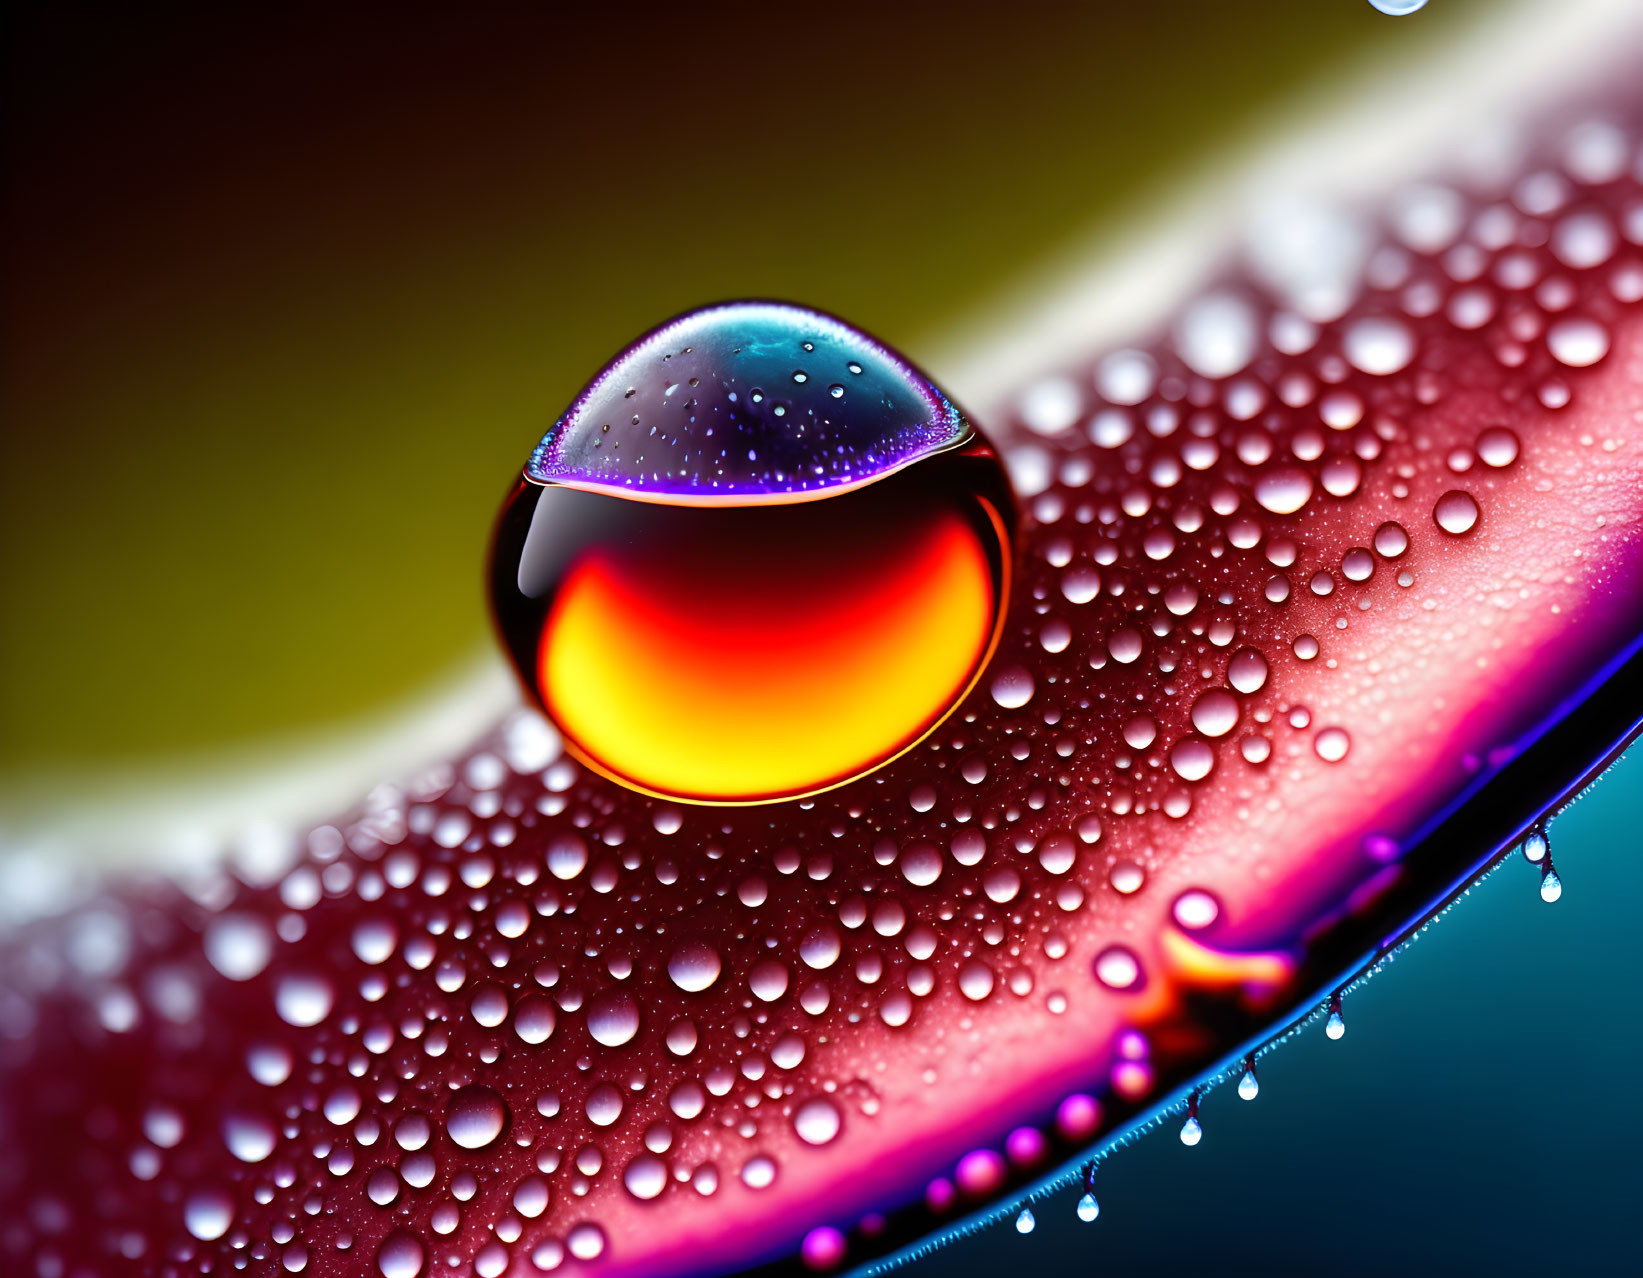 raindrop under a microscope